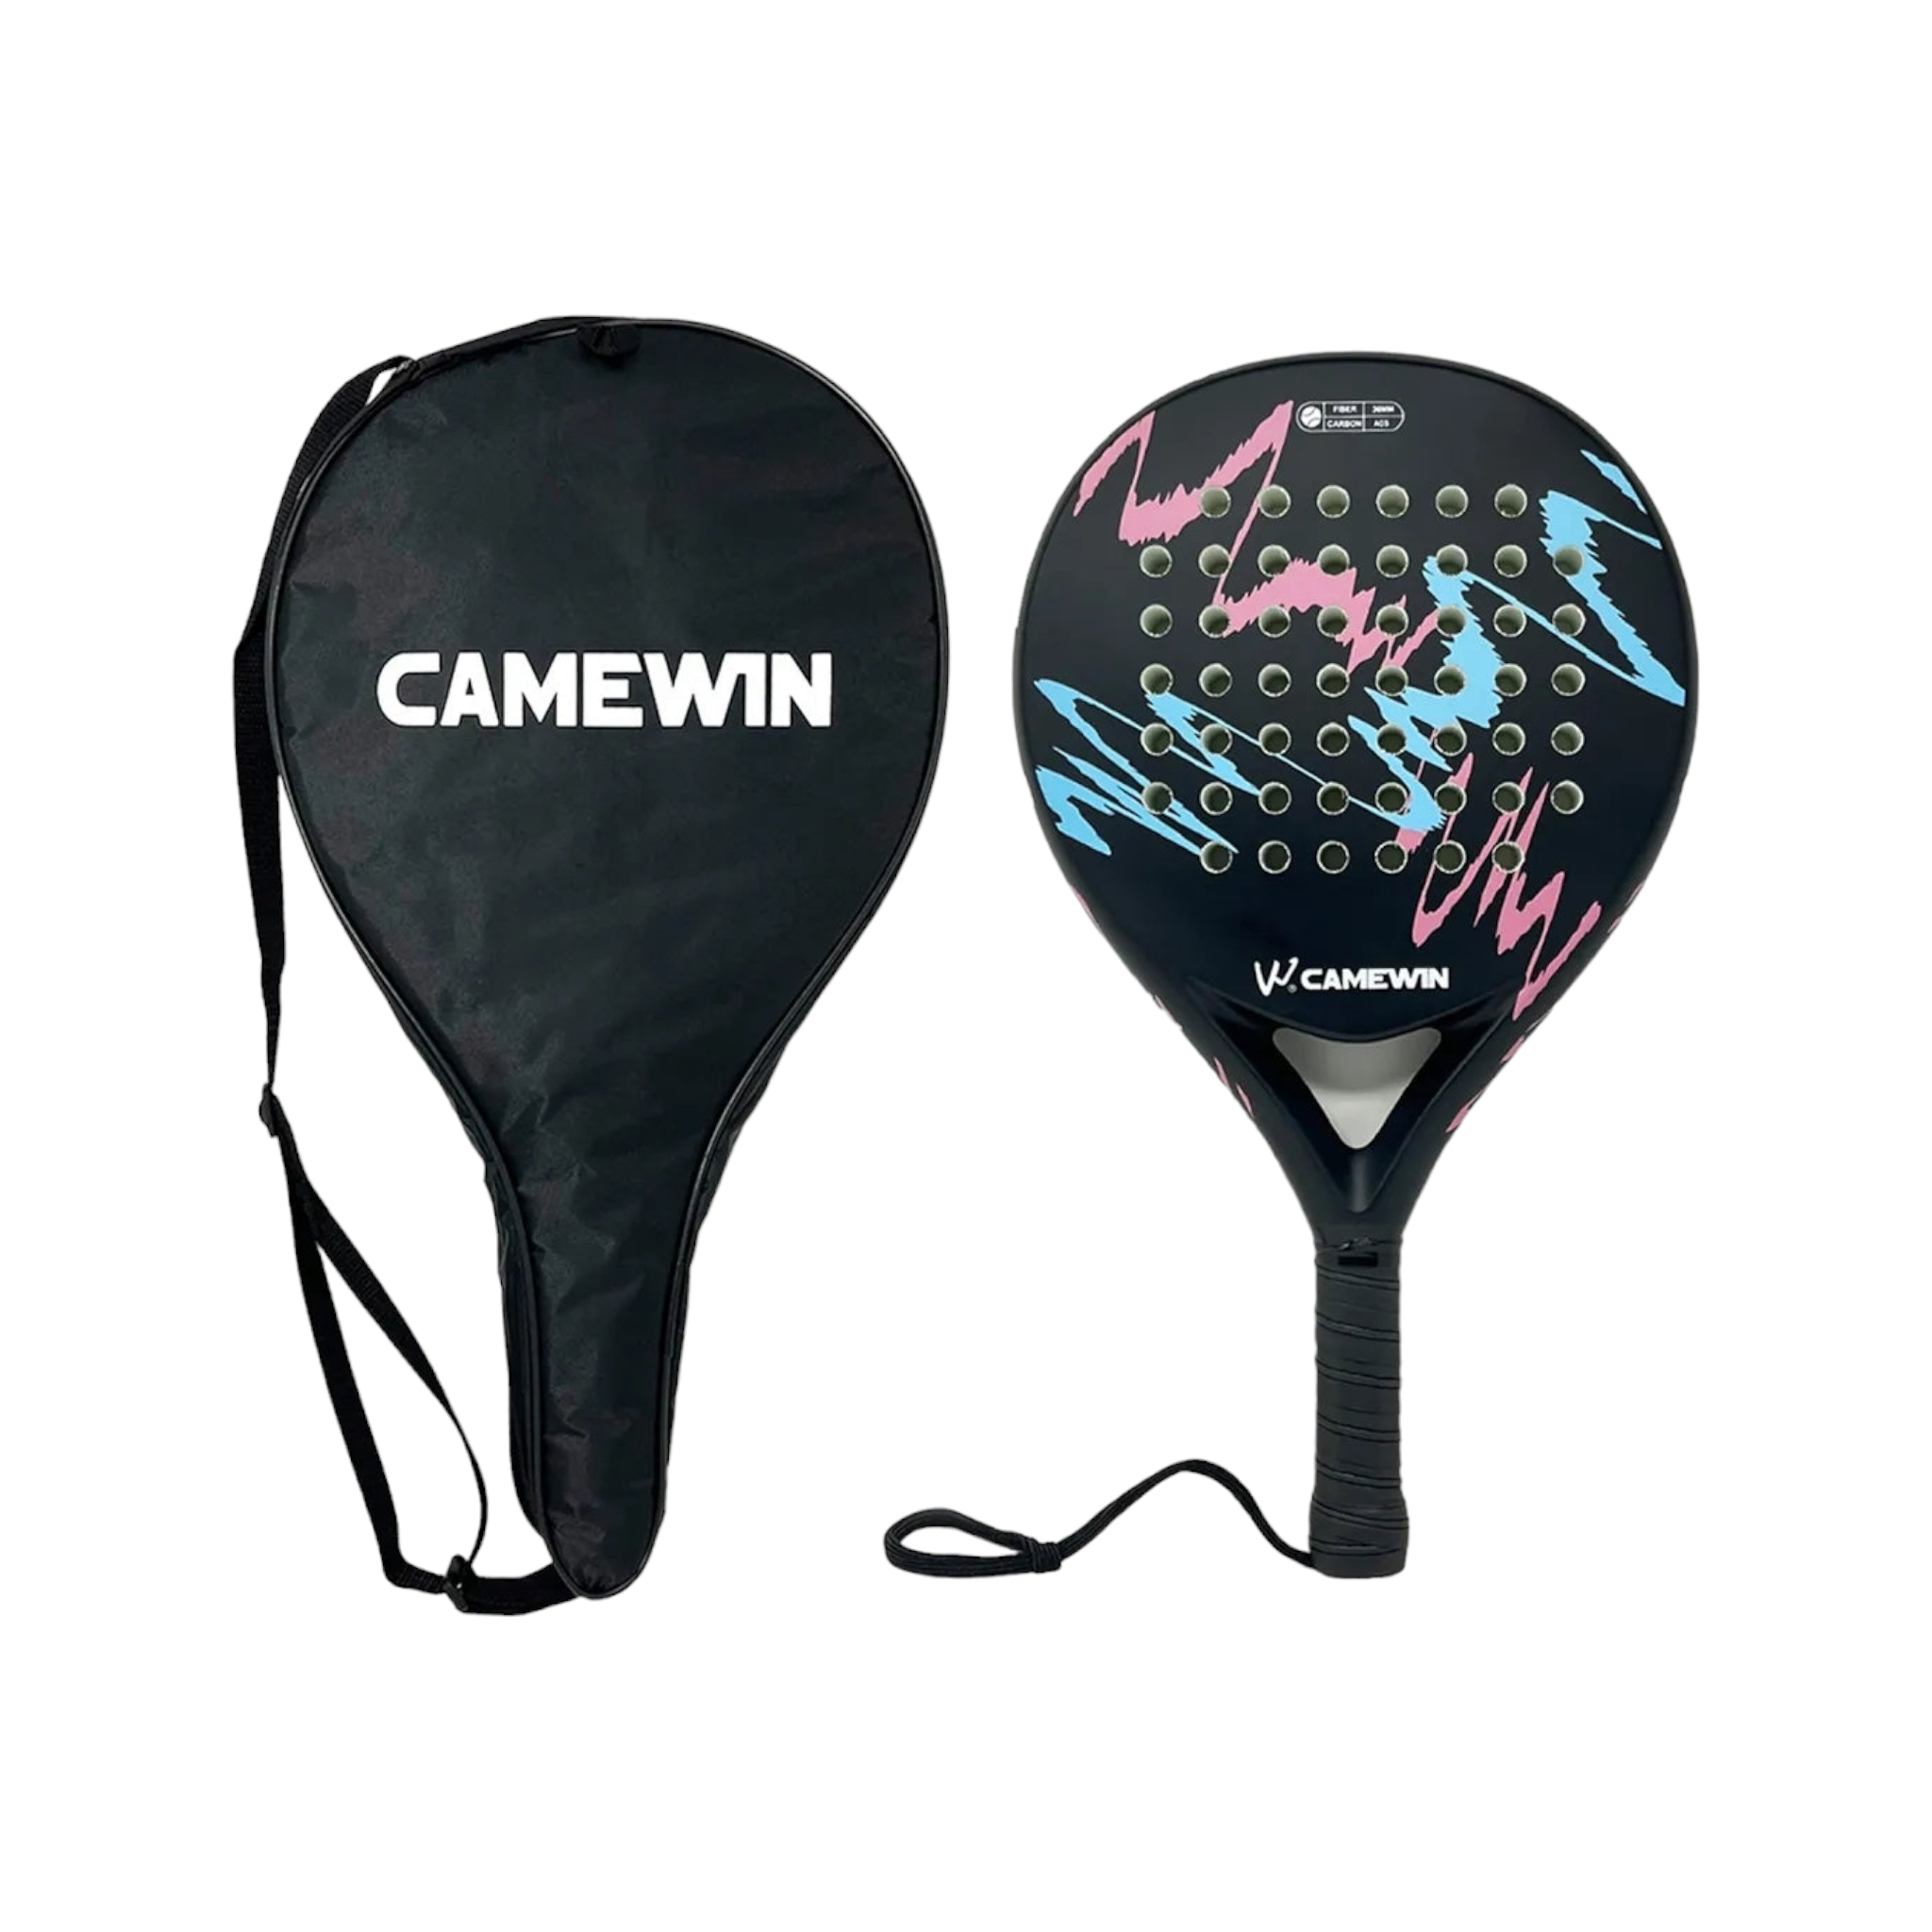 Camewin Padel Racket with Bag